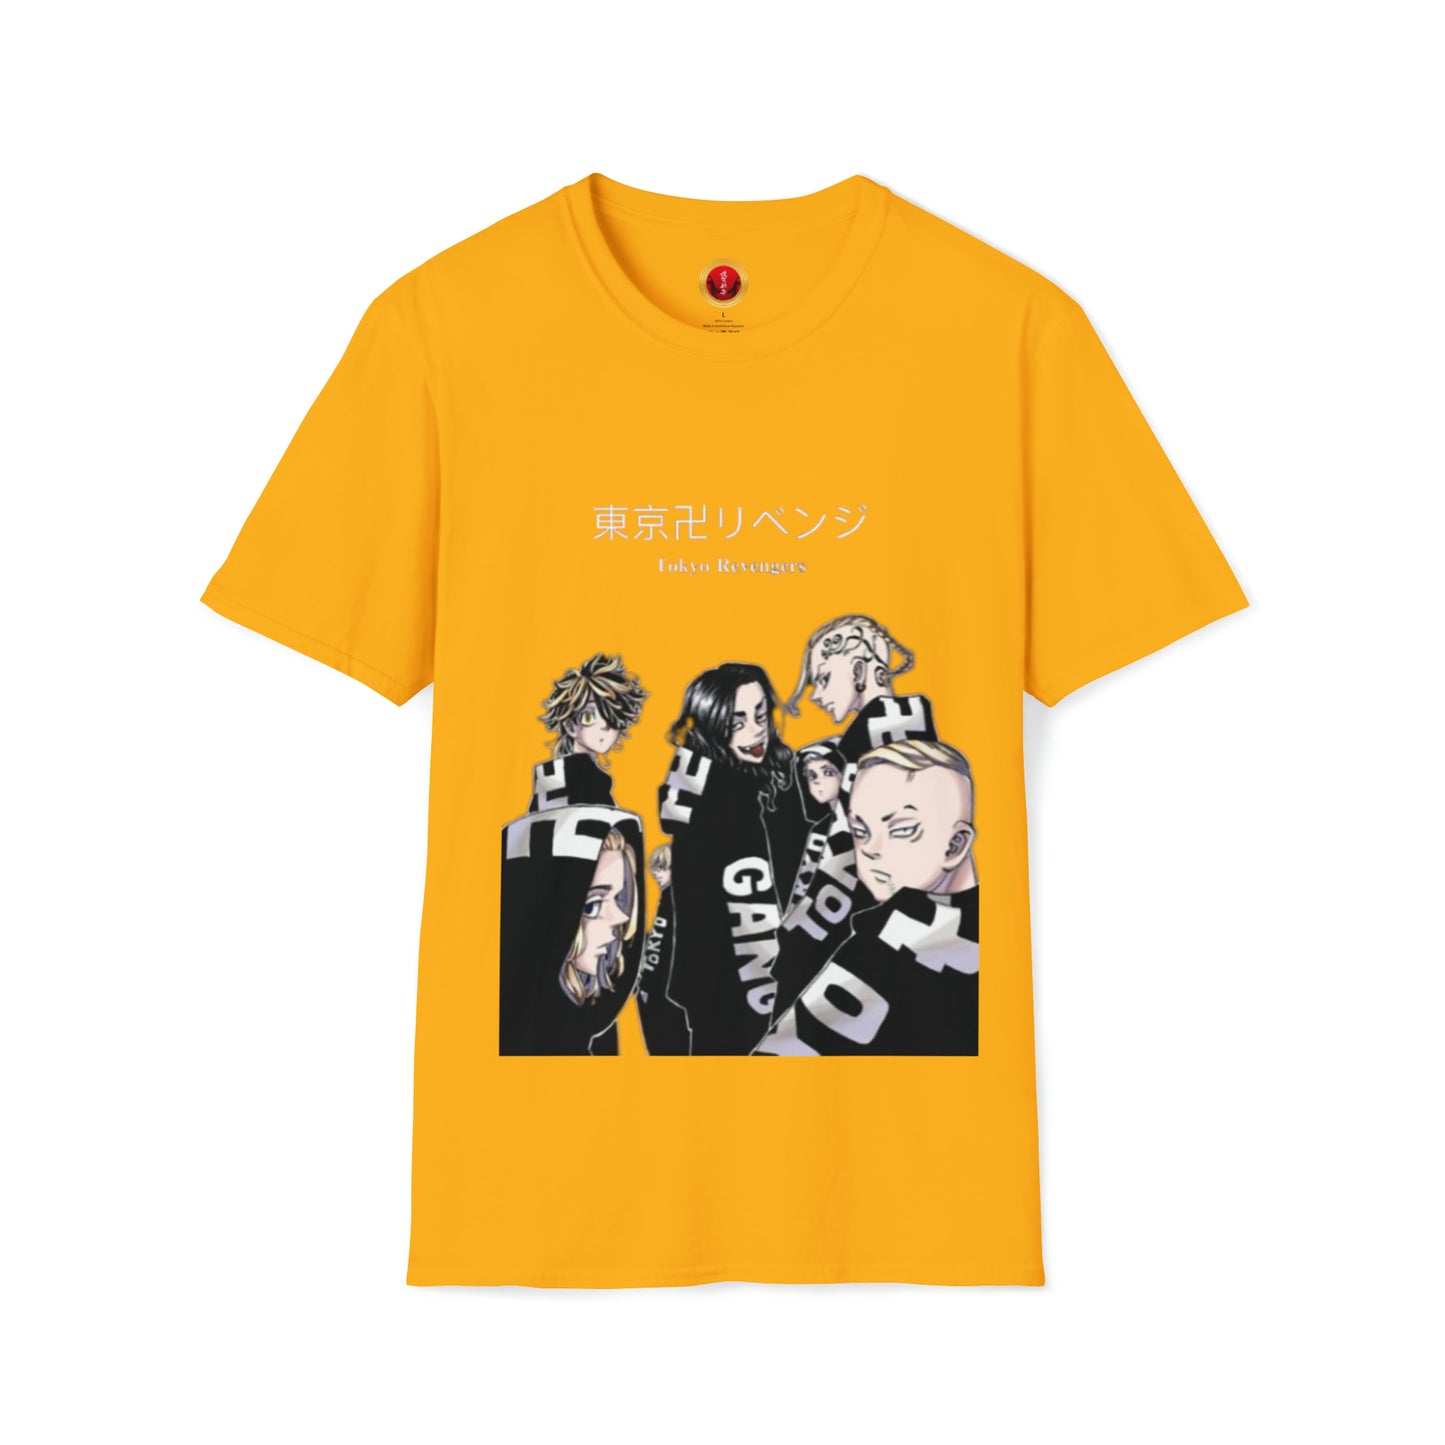 Tokyo Revengers Unisex Softstyle T-Shirt